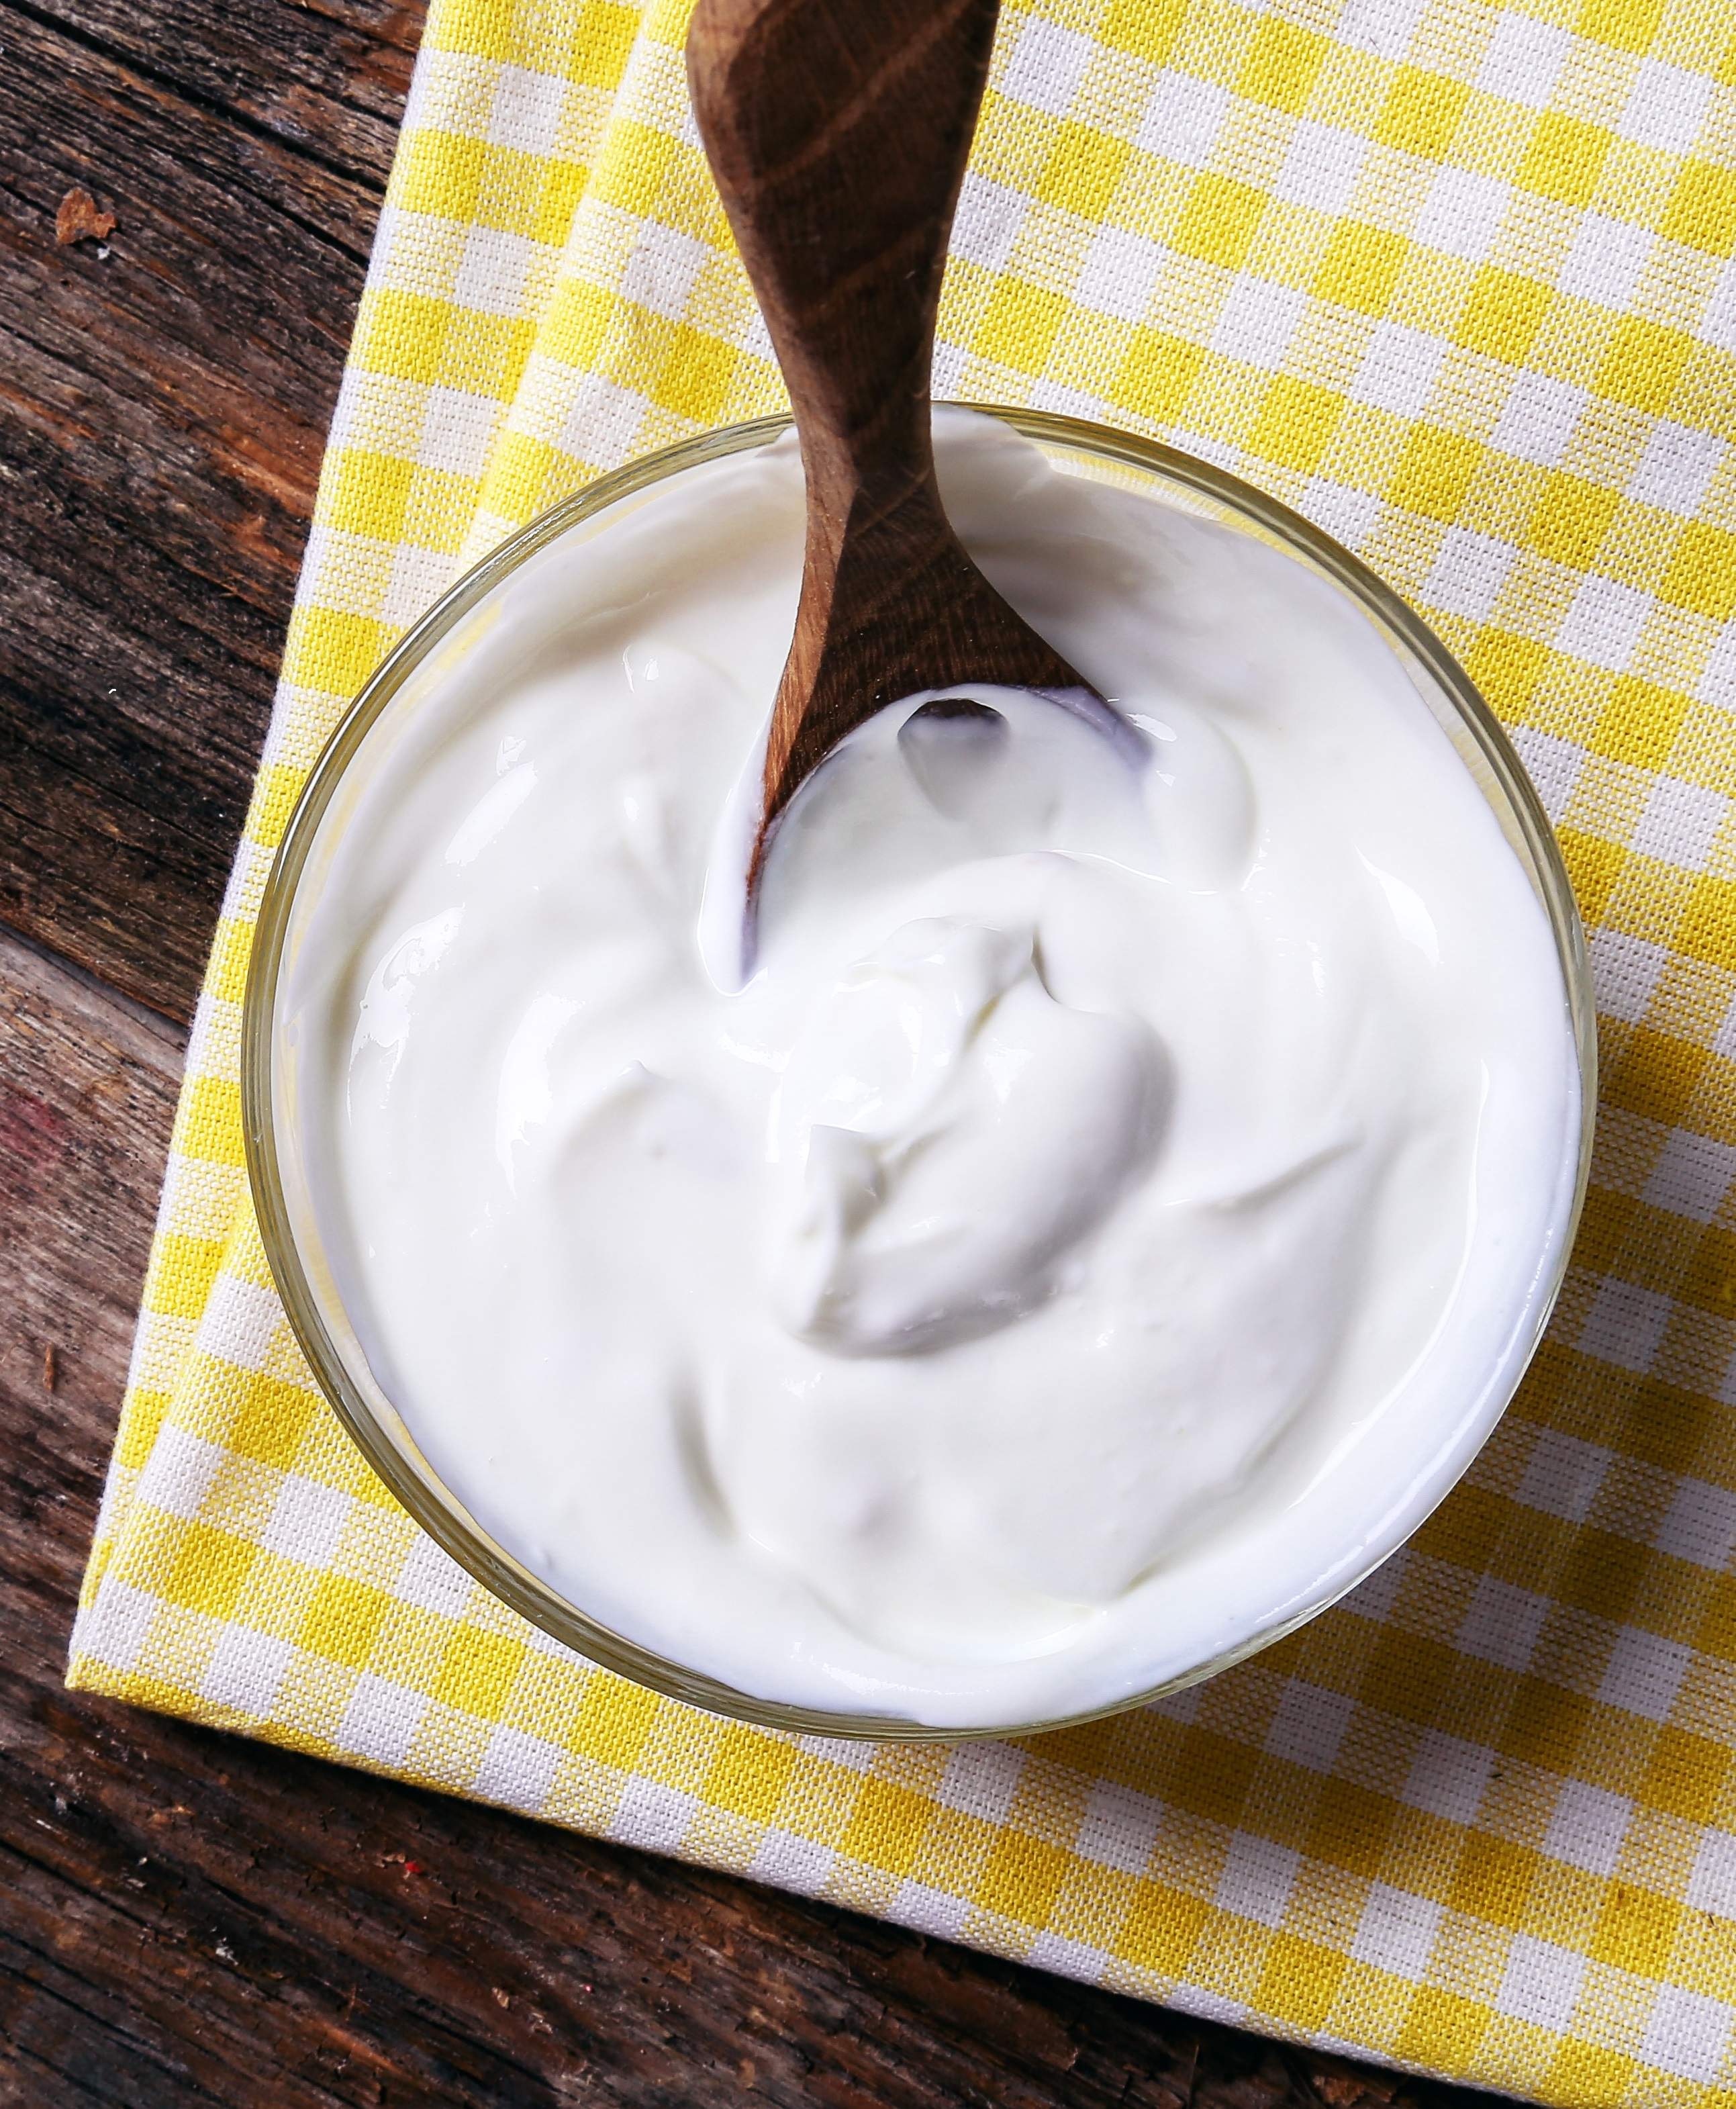 yogurt-greco-kefir-skyr-latte-acqua-lattosio-proteine-grassi-merenda-colazione-spuntino-sport